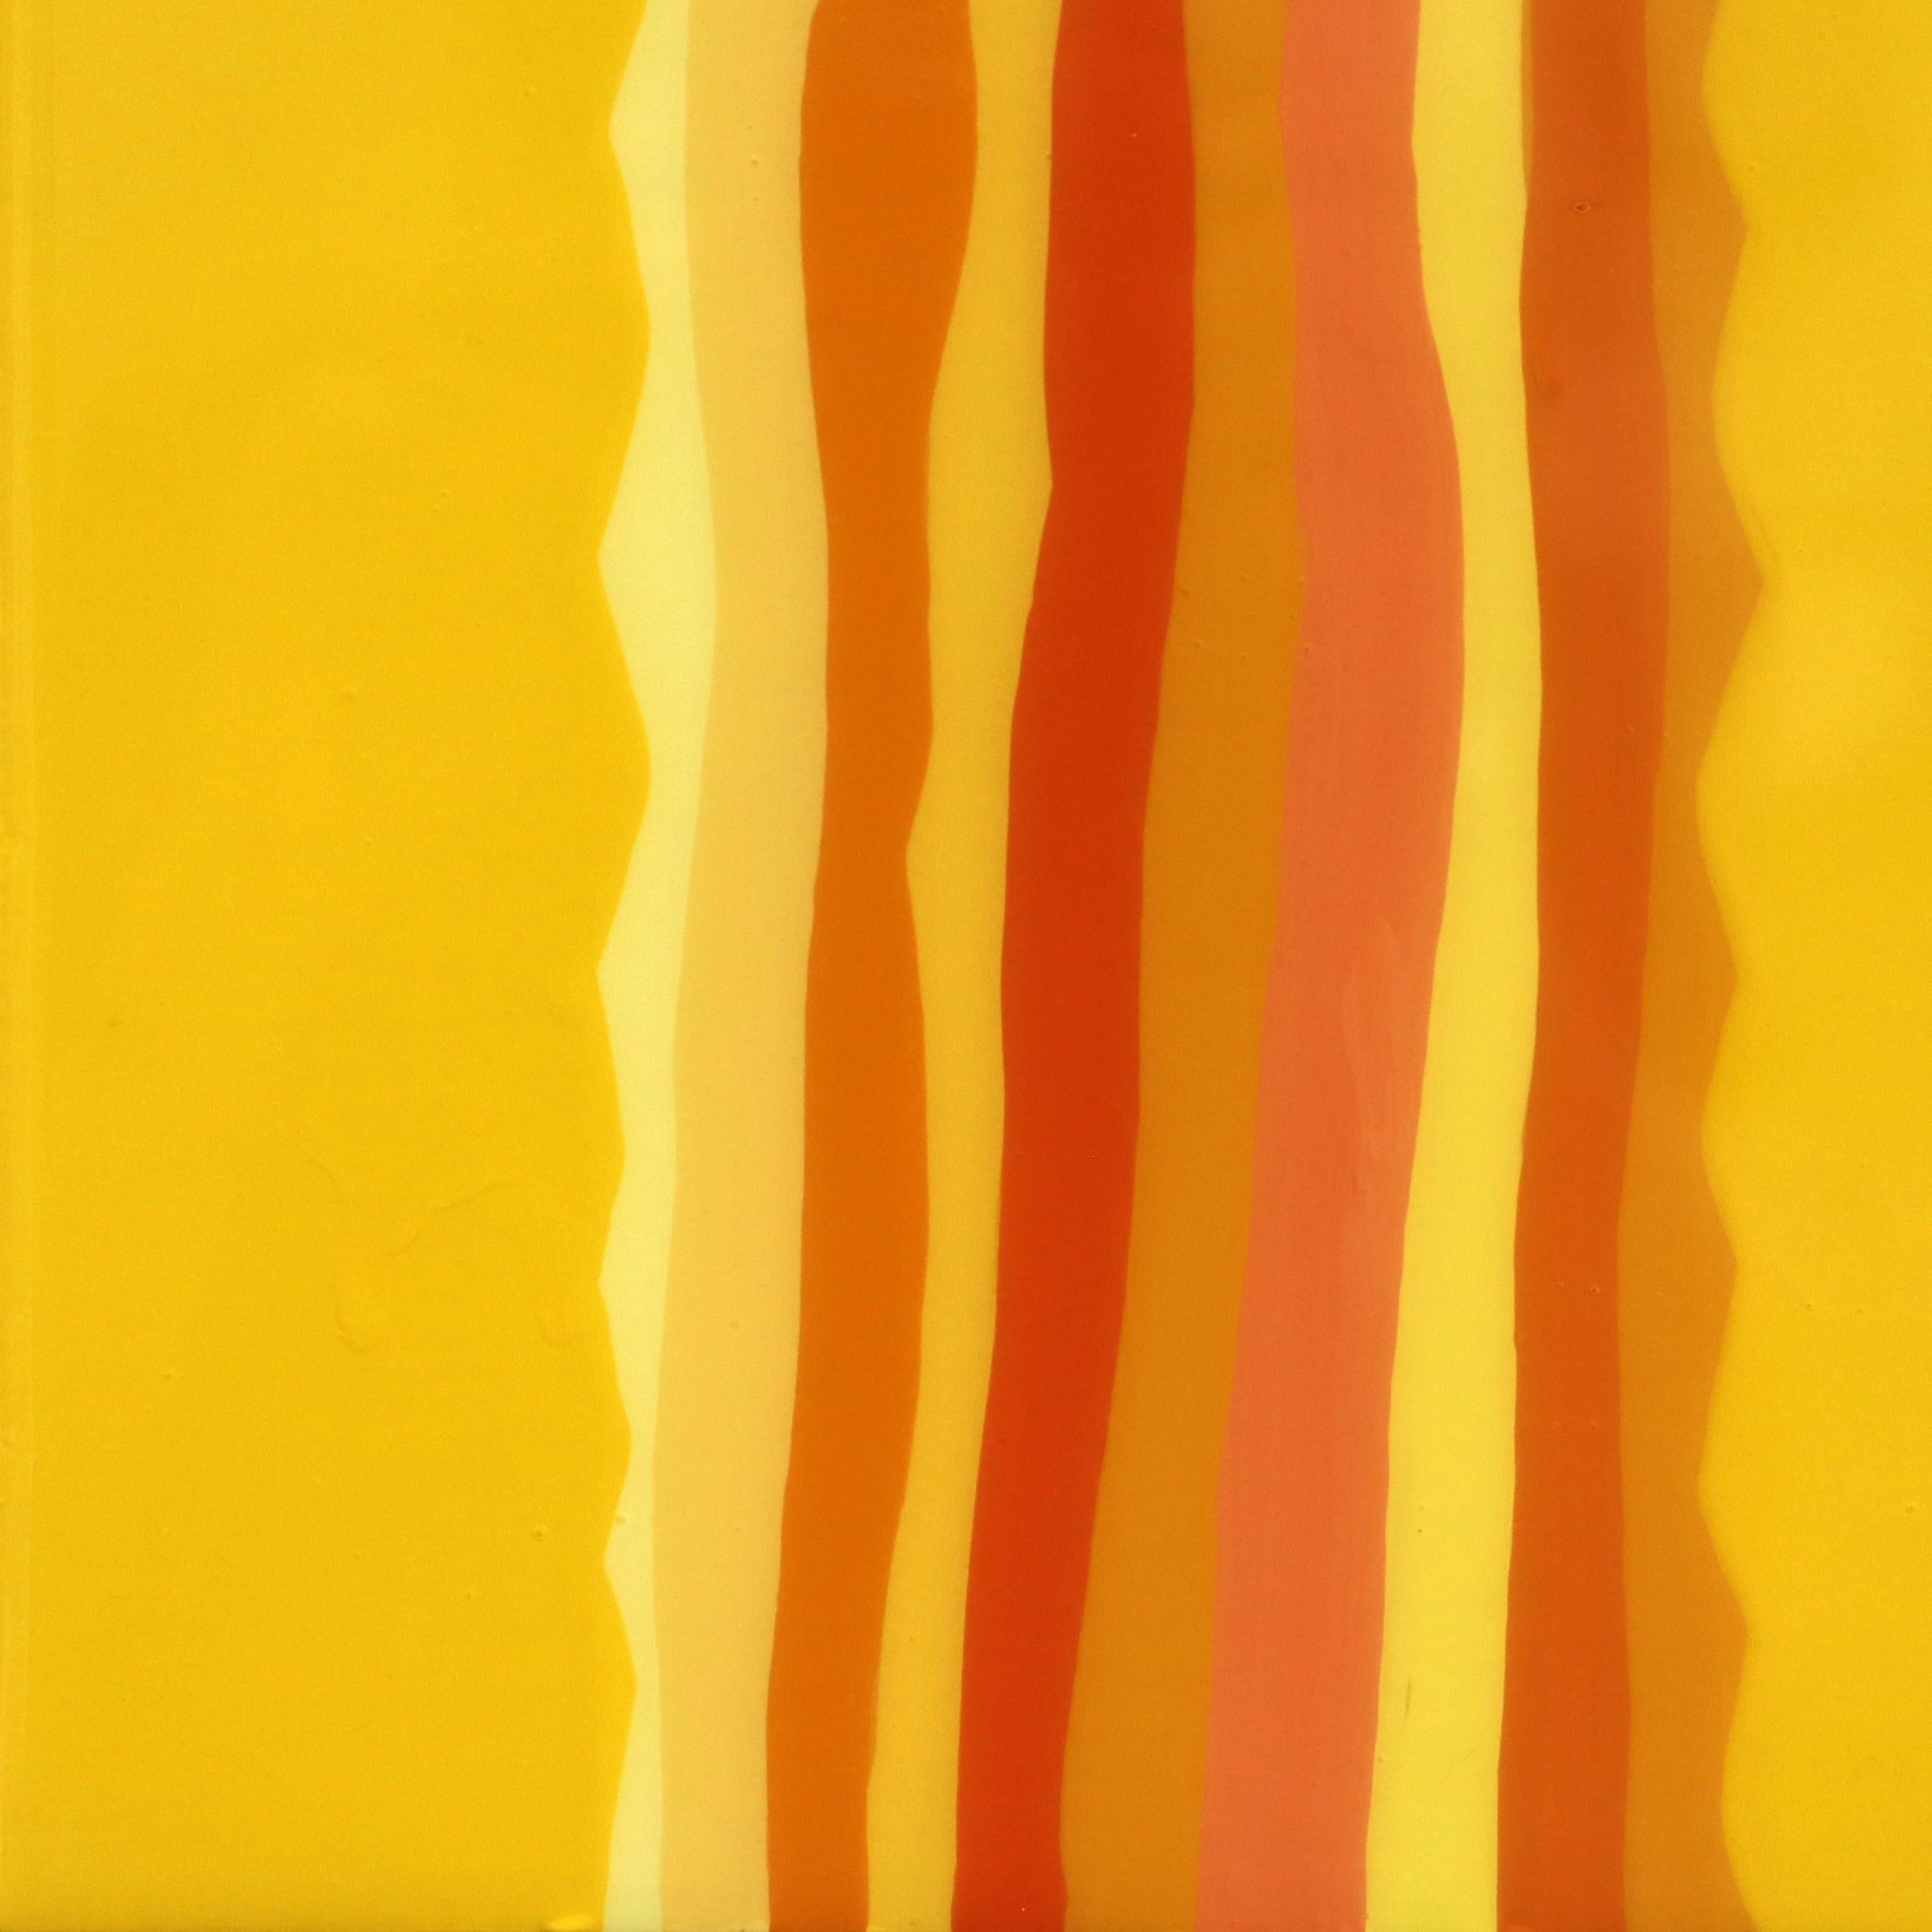 Lellow - Vibrant Yellow Orange Southwest Inspired Pop Art Cactus Painting For Sale 3